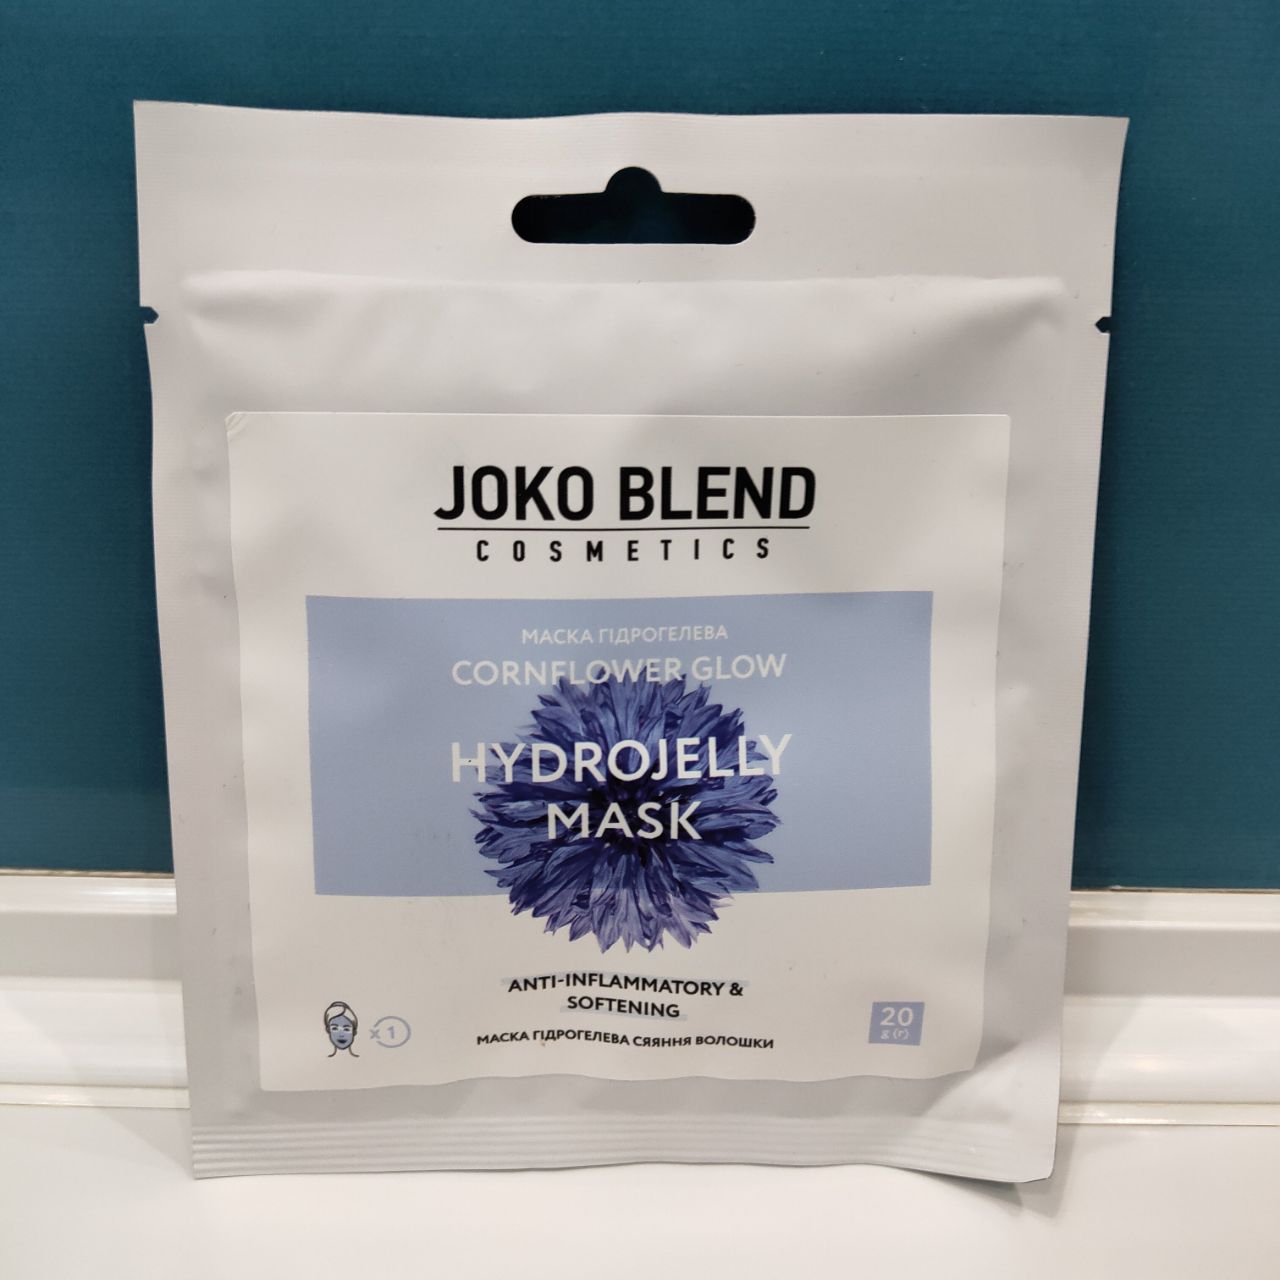 Joko Blend Cornflower Glow Hydrojelly Mask